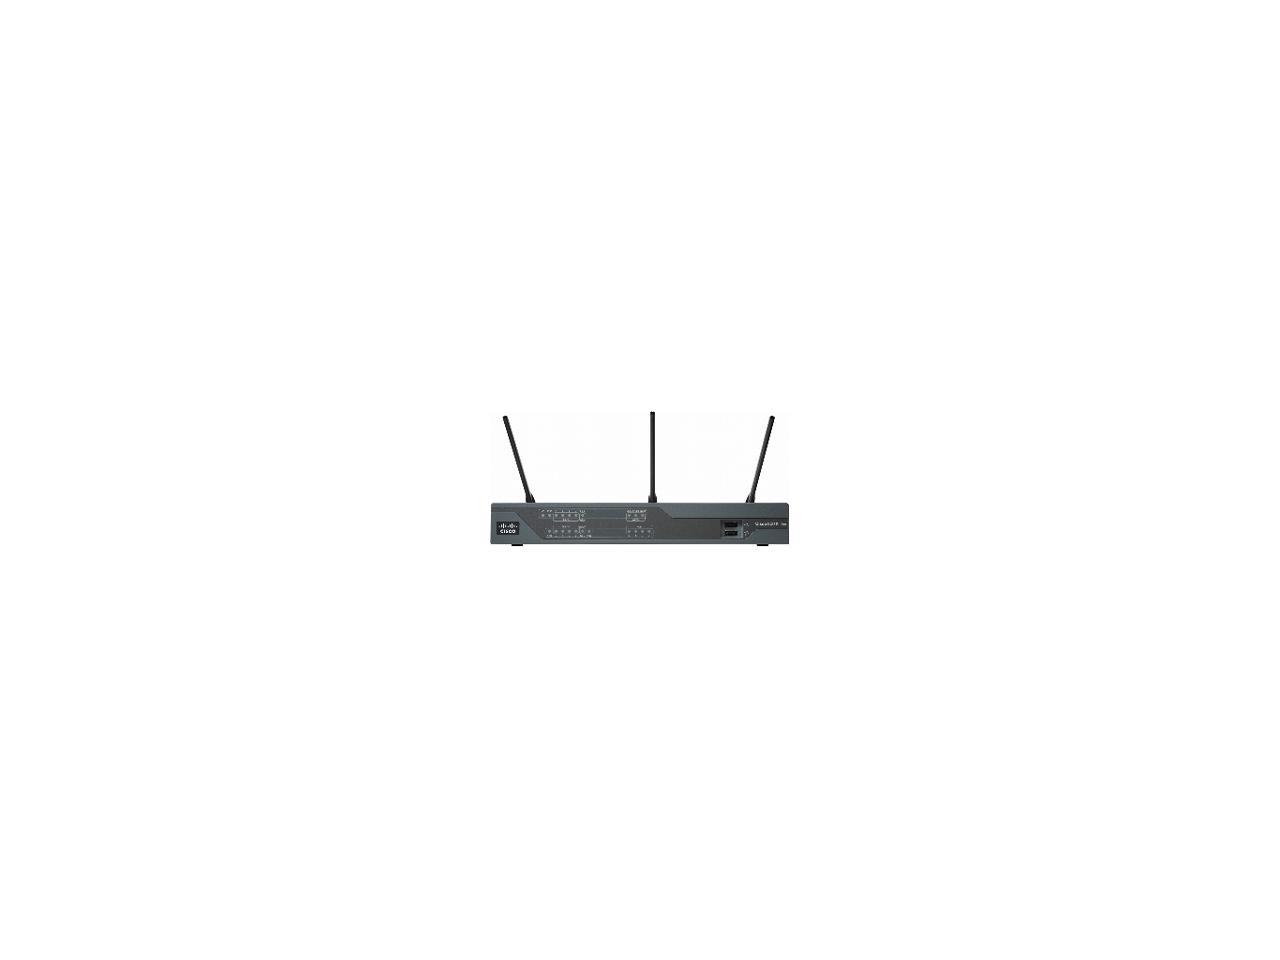 Cisco - 892 Gigabit Ethernet Wireless Security Router